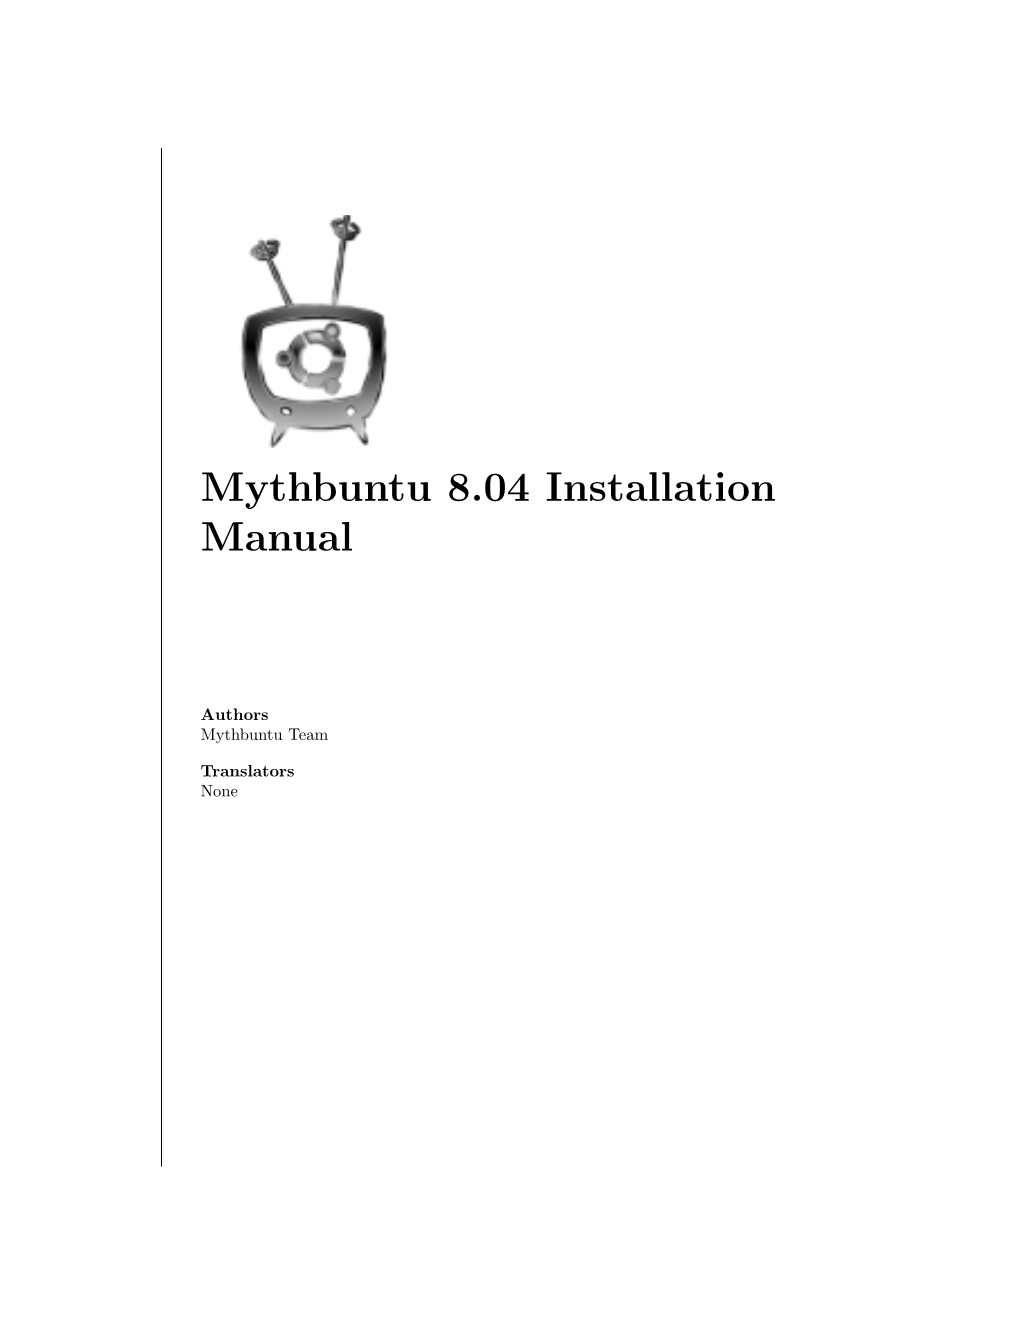 Mythbuntu 8.04 Installation Manual